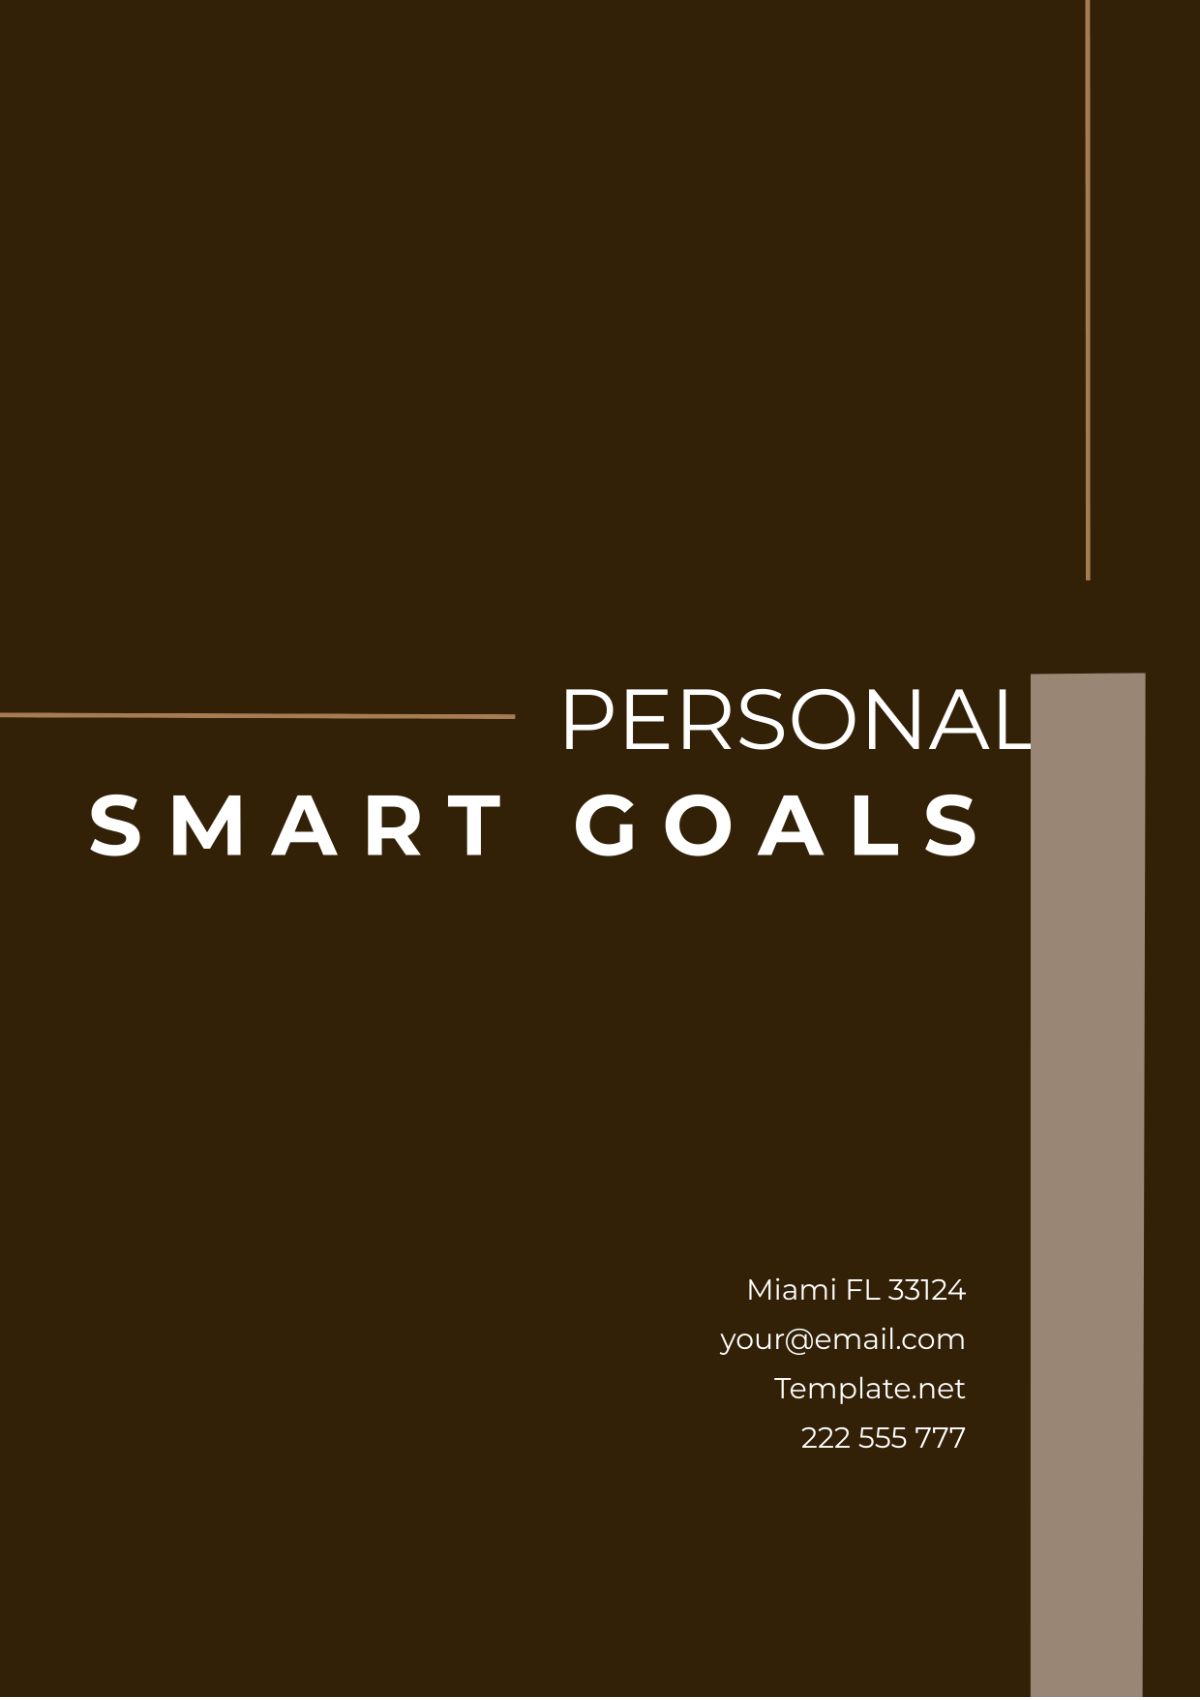 Personal SMART Goals Template